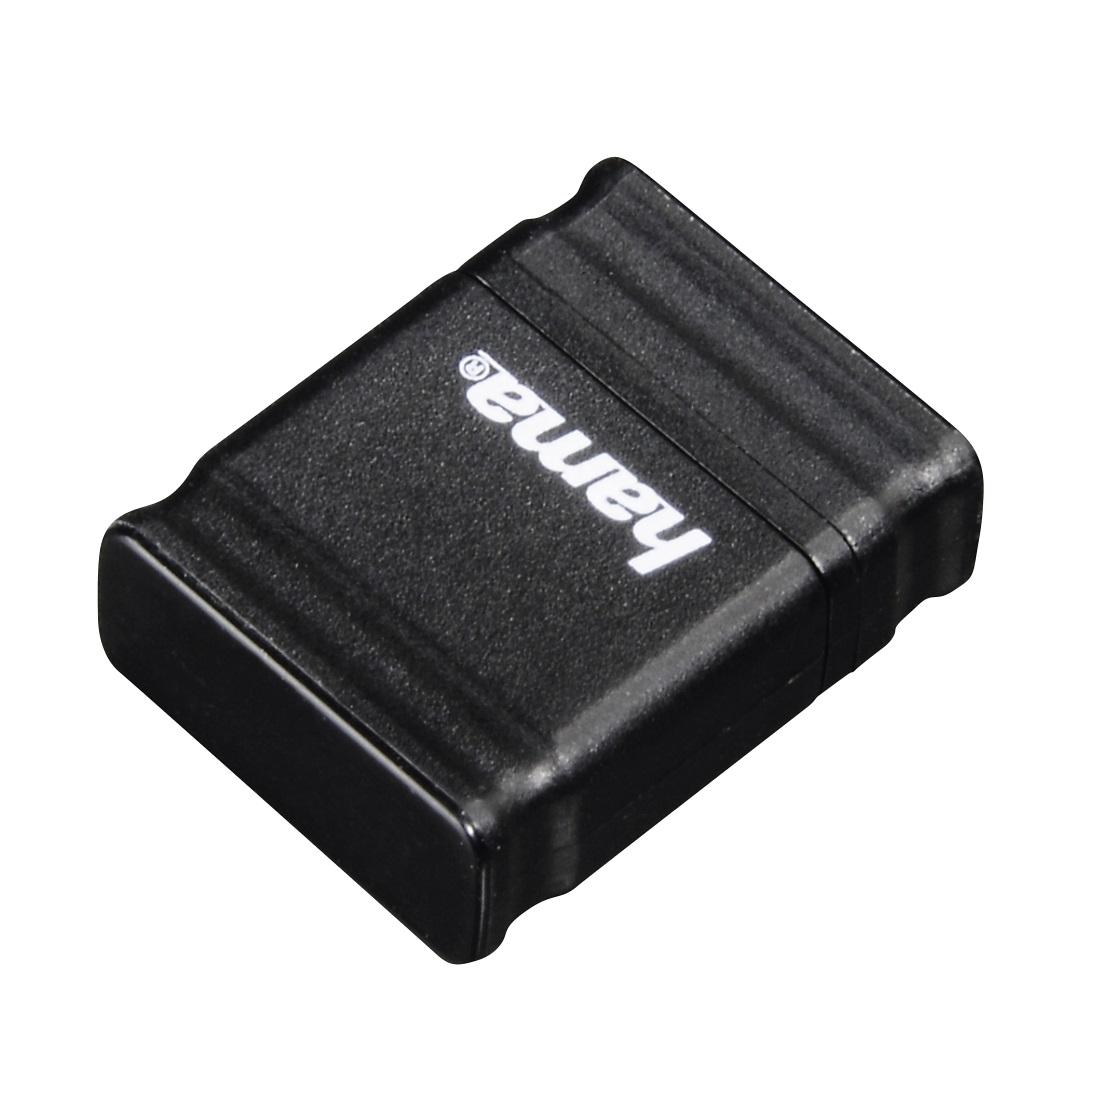 USB памет HAMA Smartly 3in1, 64GB, Micro USB adapter, Черен